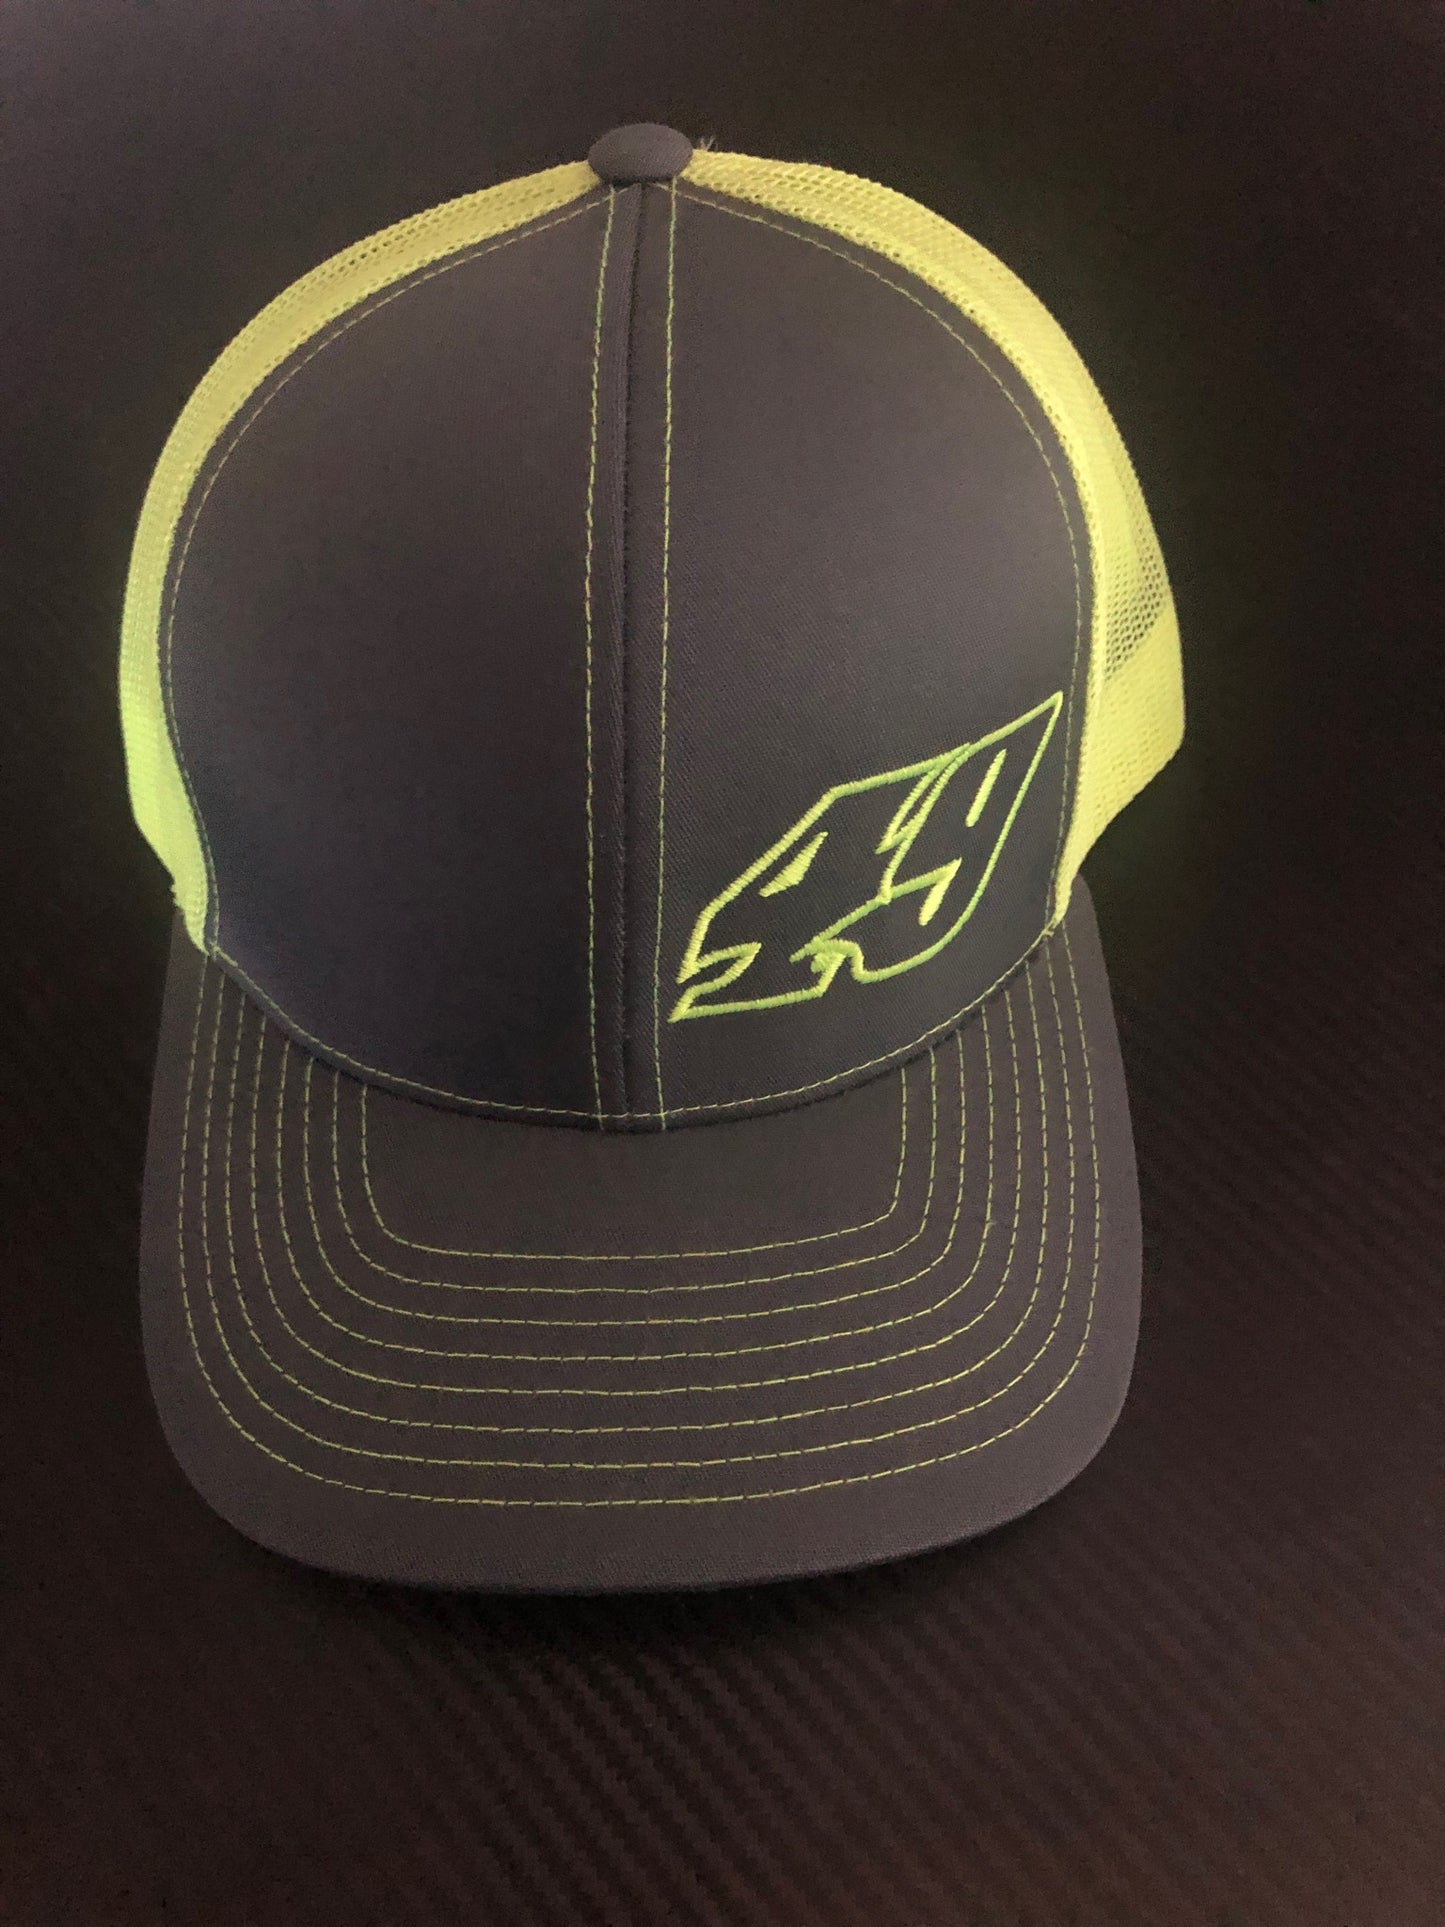 H2317DGY - Dark Gray / Yellow Mesh #49 Snap Back Hat